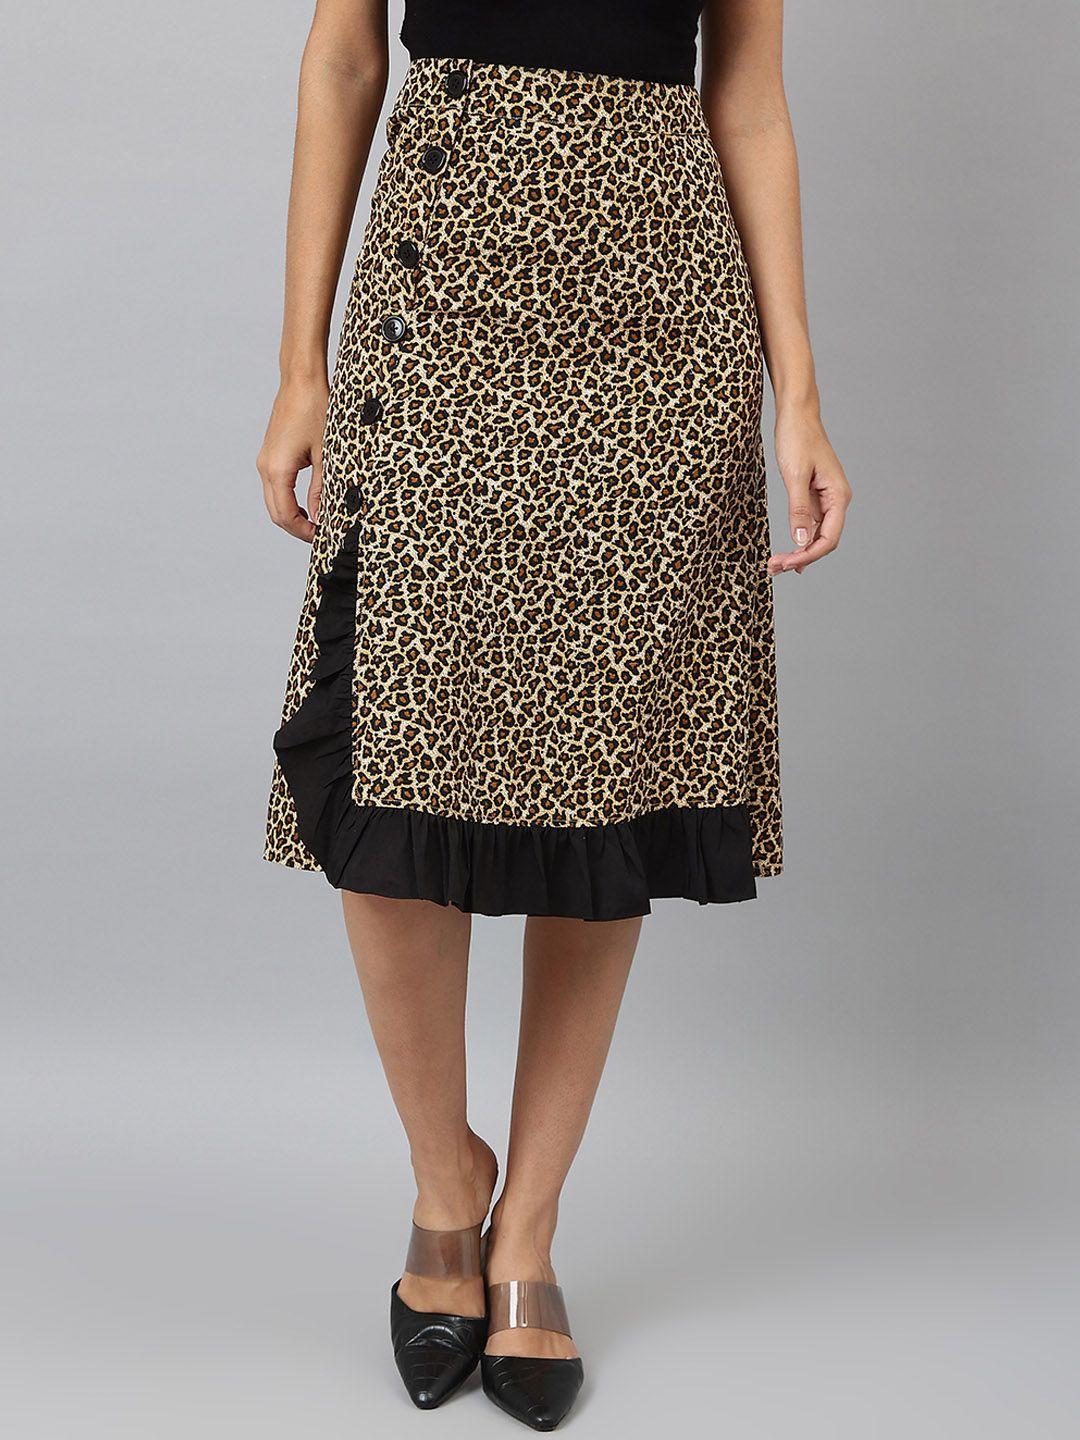 deebaco women brown & black animal printed a-line skirt